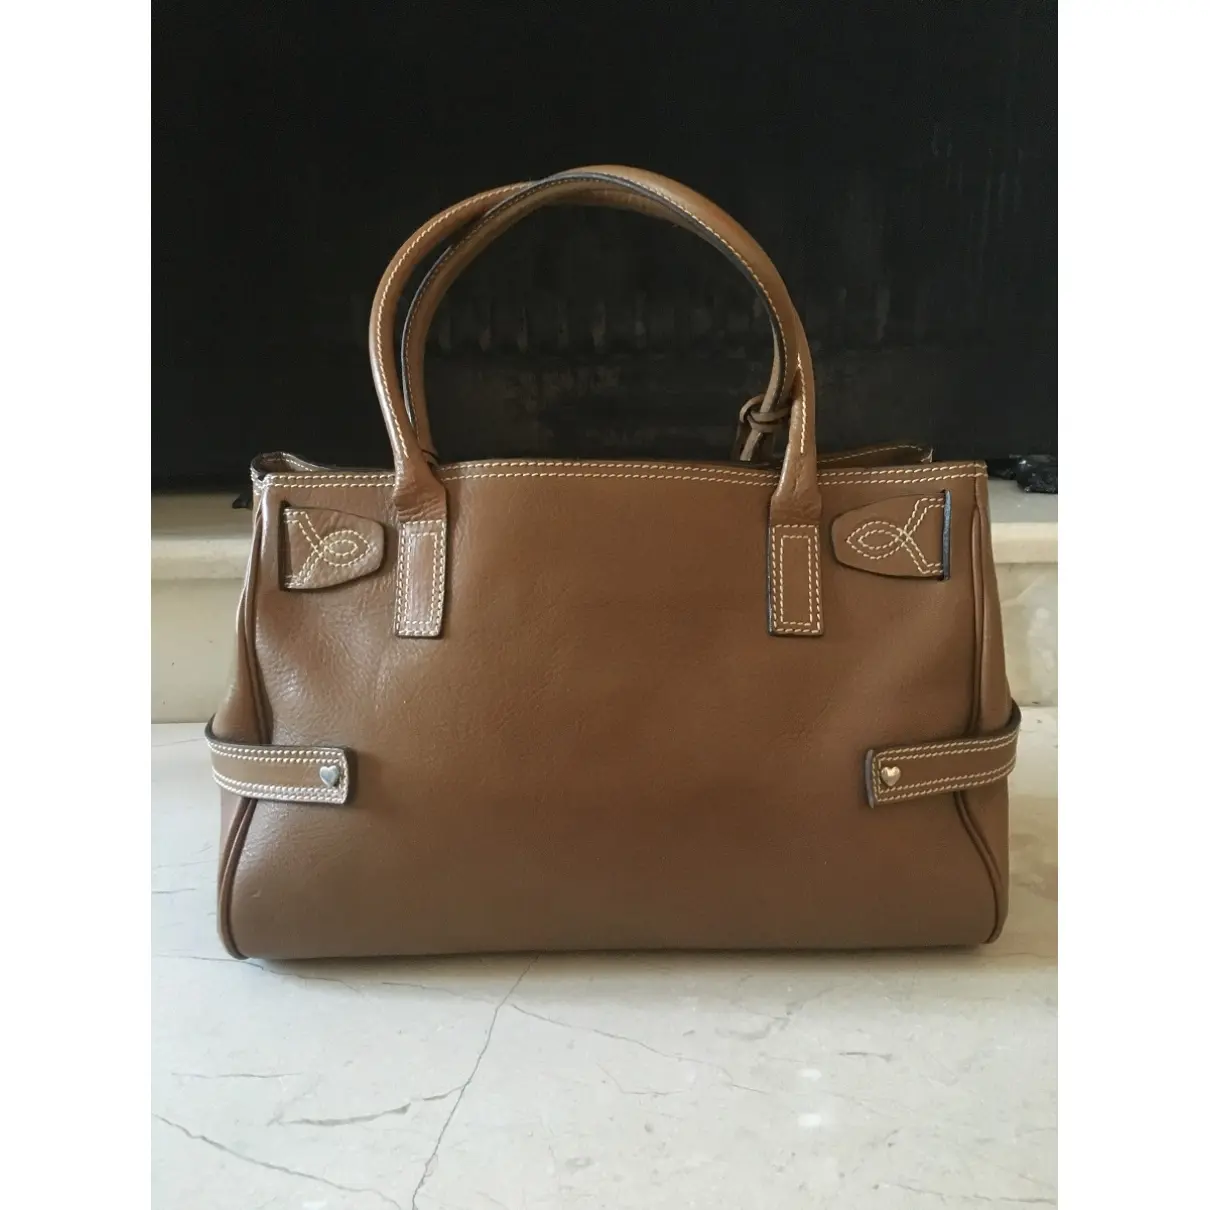 Luella Leather handbag for sale